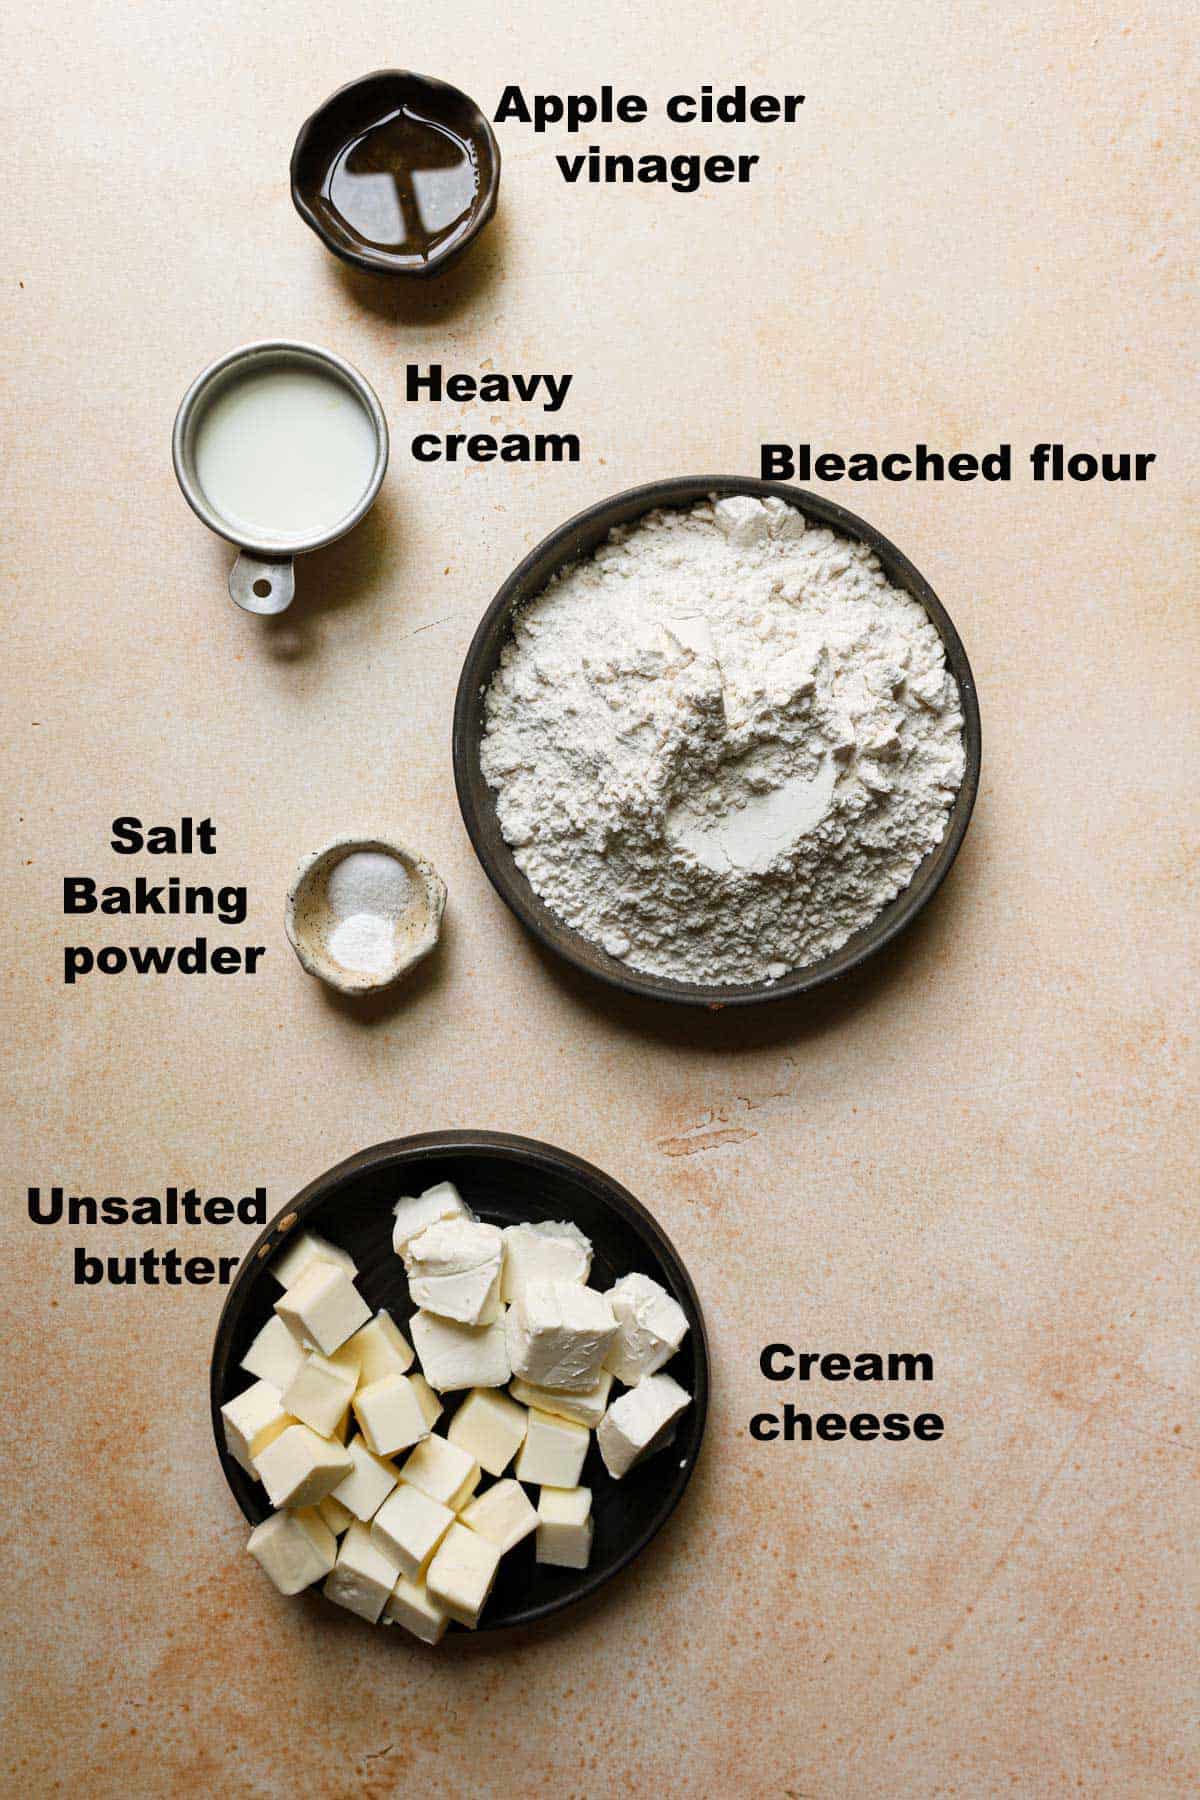 Ingredients to make crust